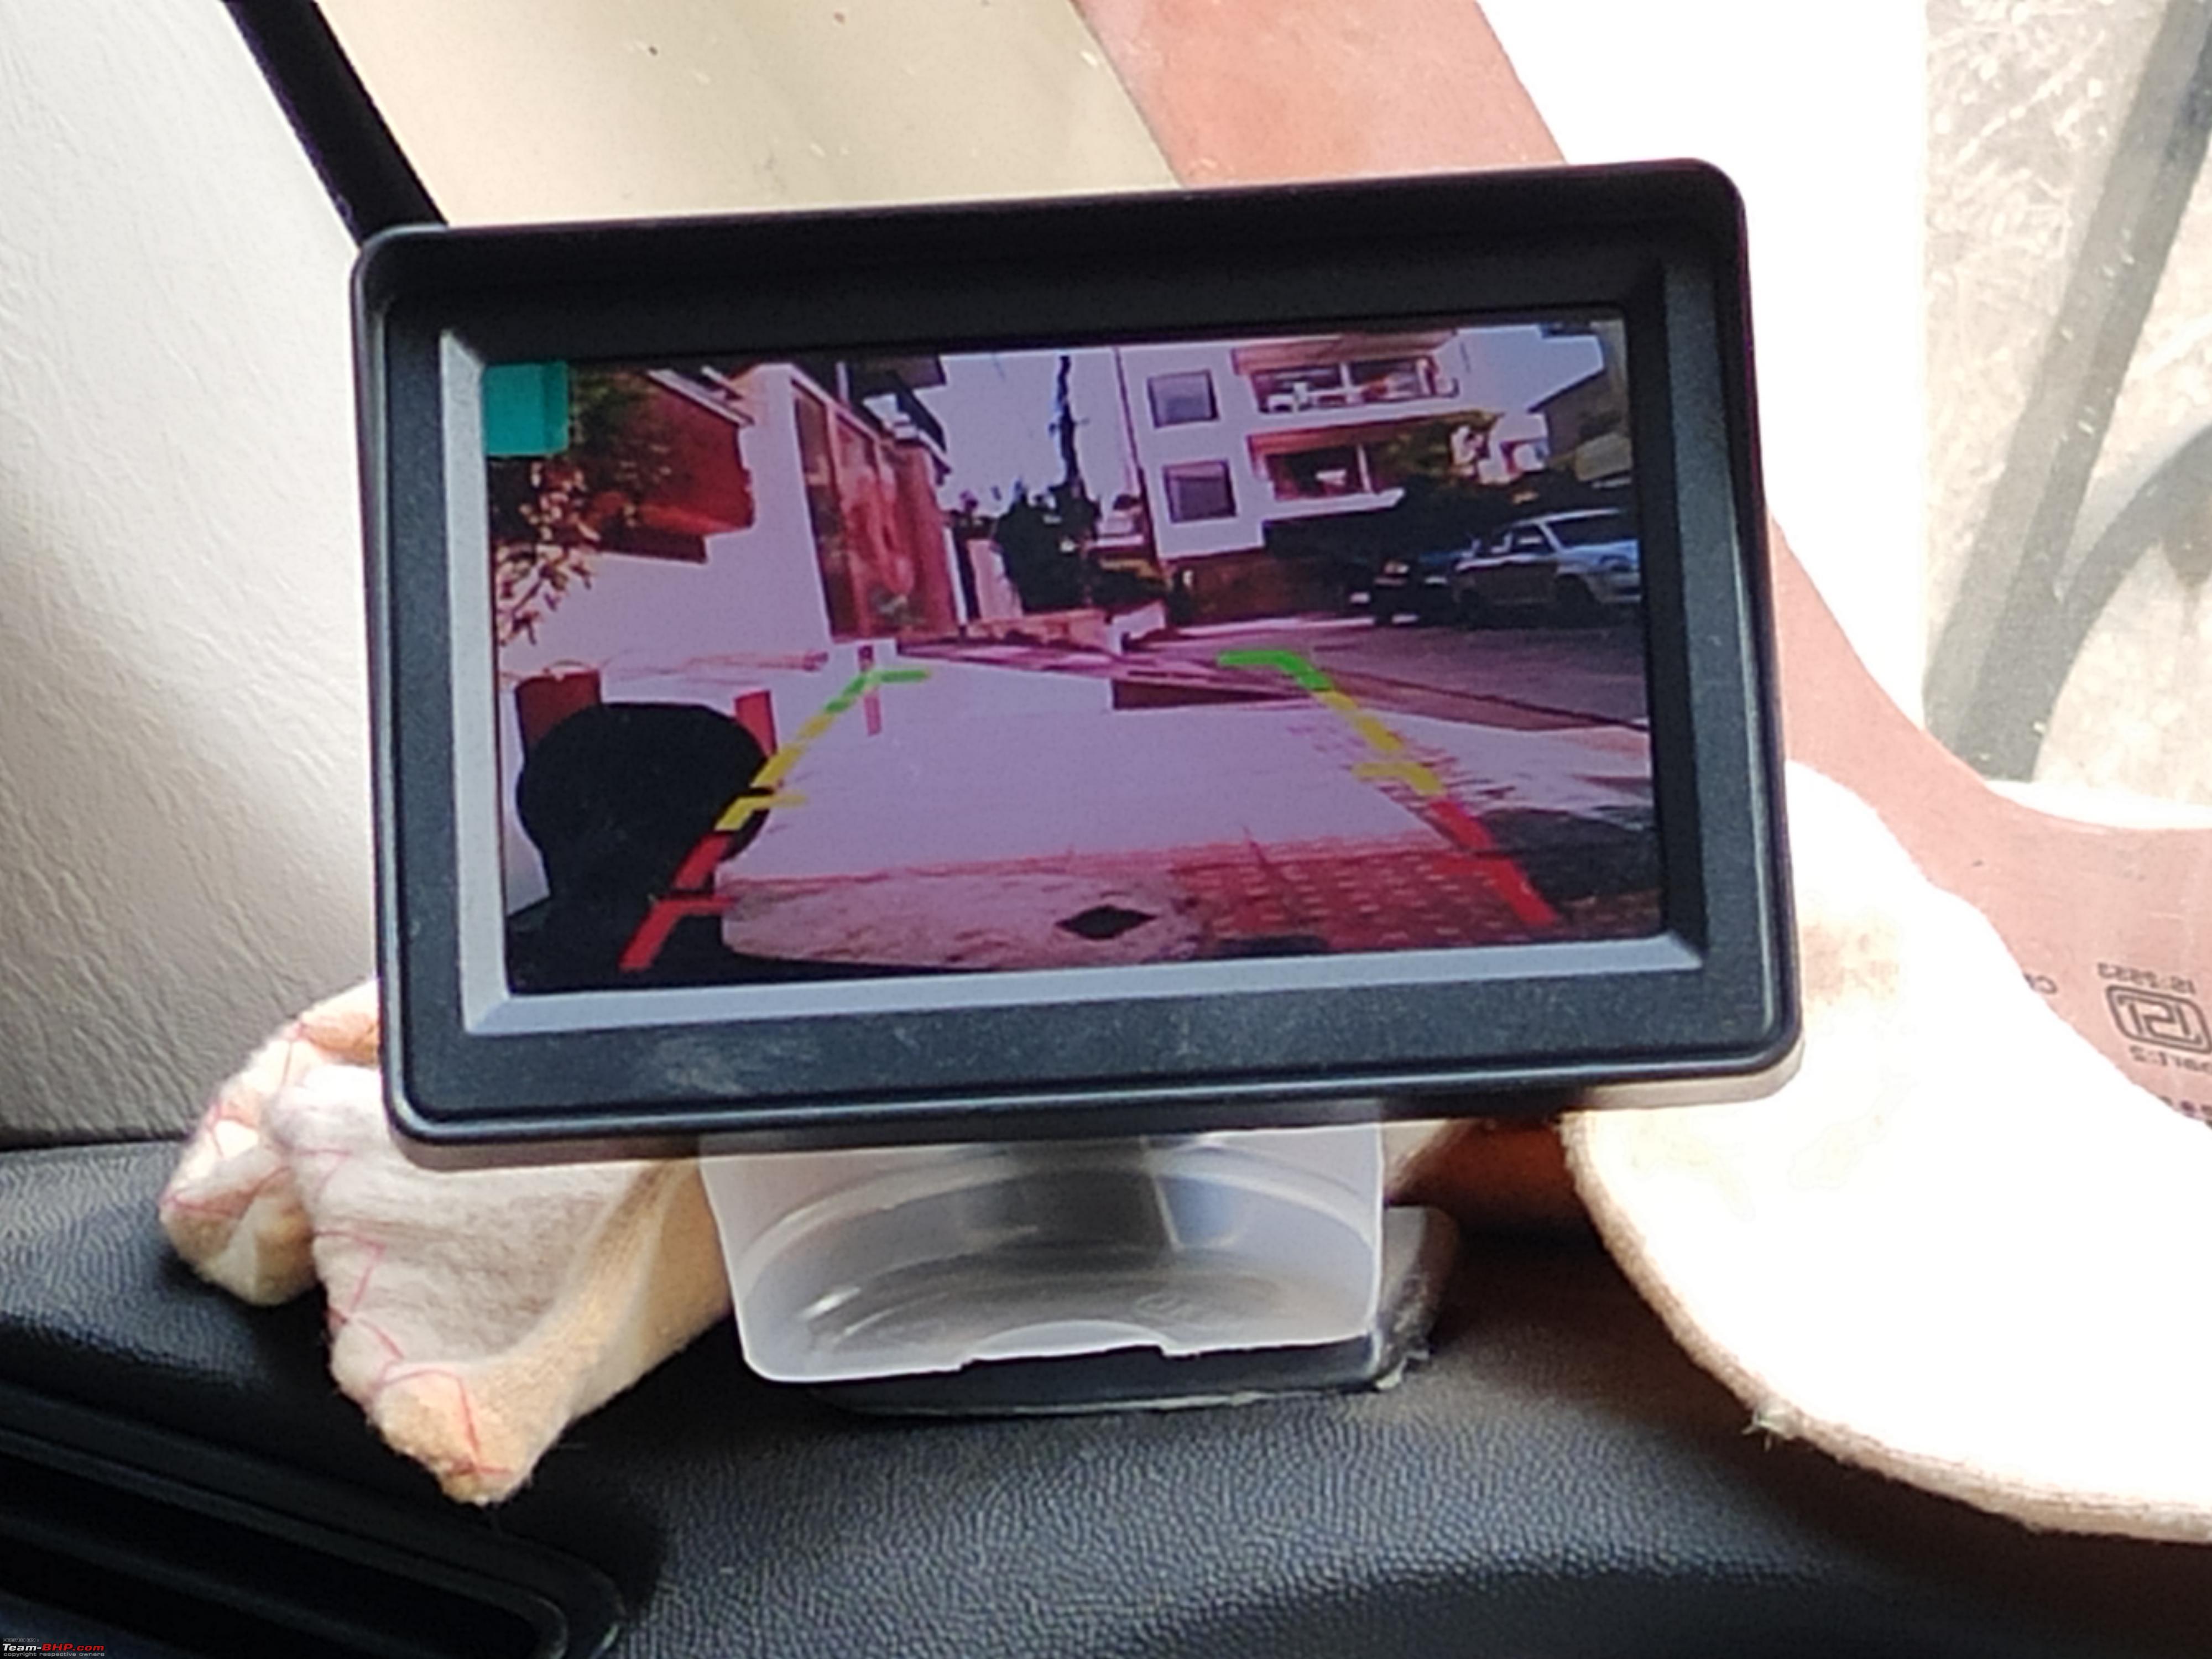 OE Type Car Rear View Parking Front and Rear Backup Camera Sensor for  Honda/Nissan - China Parking Sensor, OE Parking Sensor